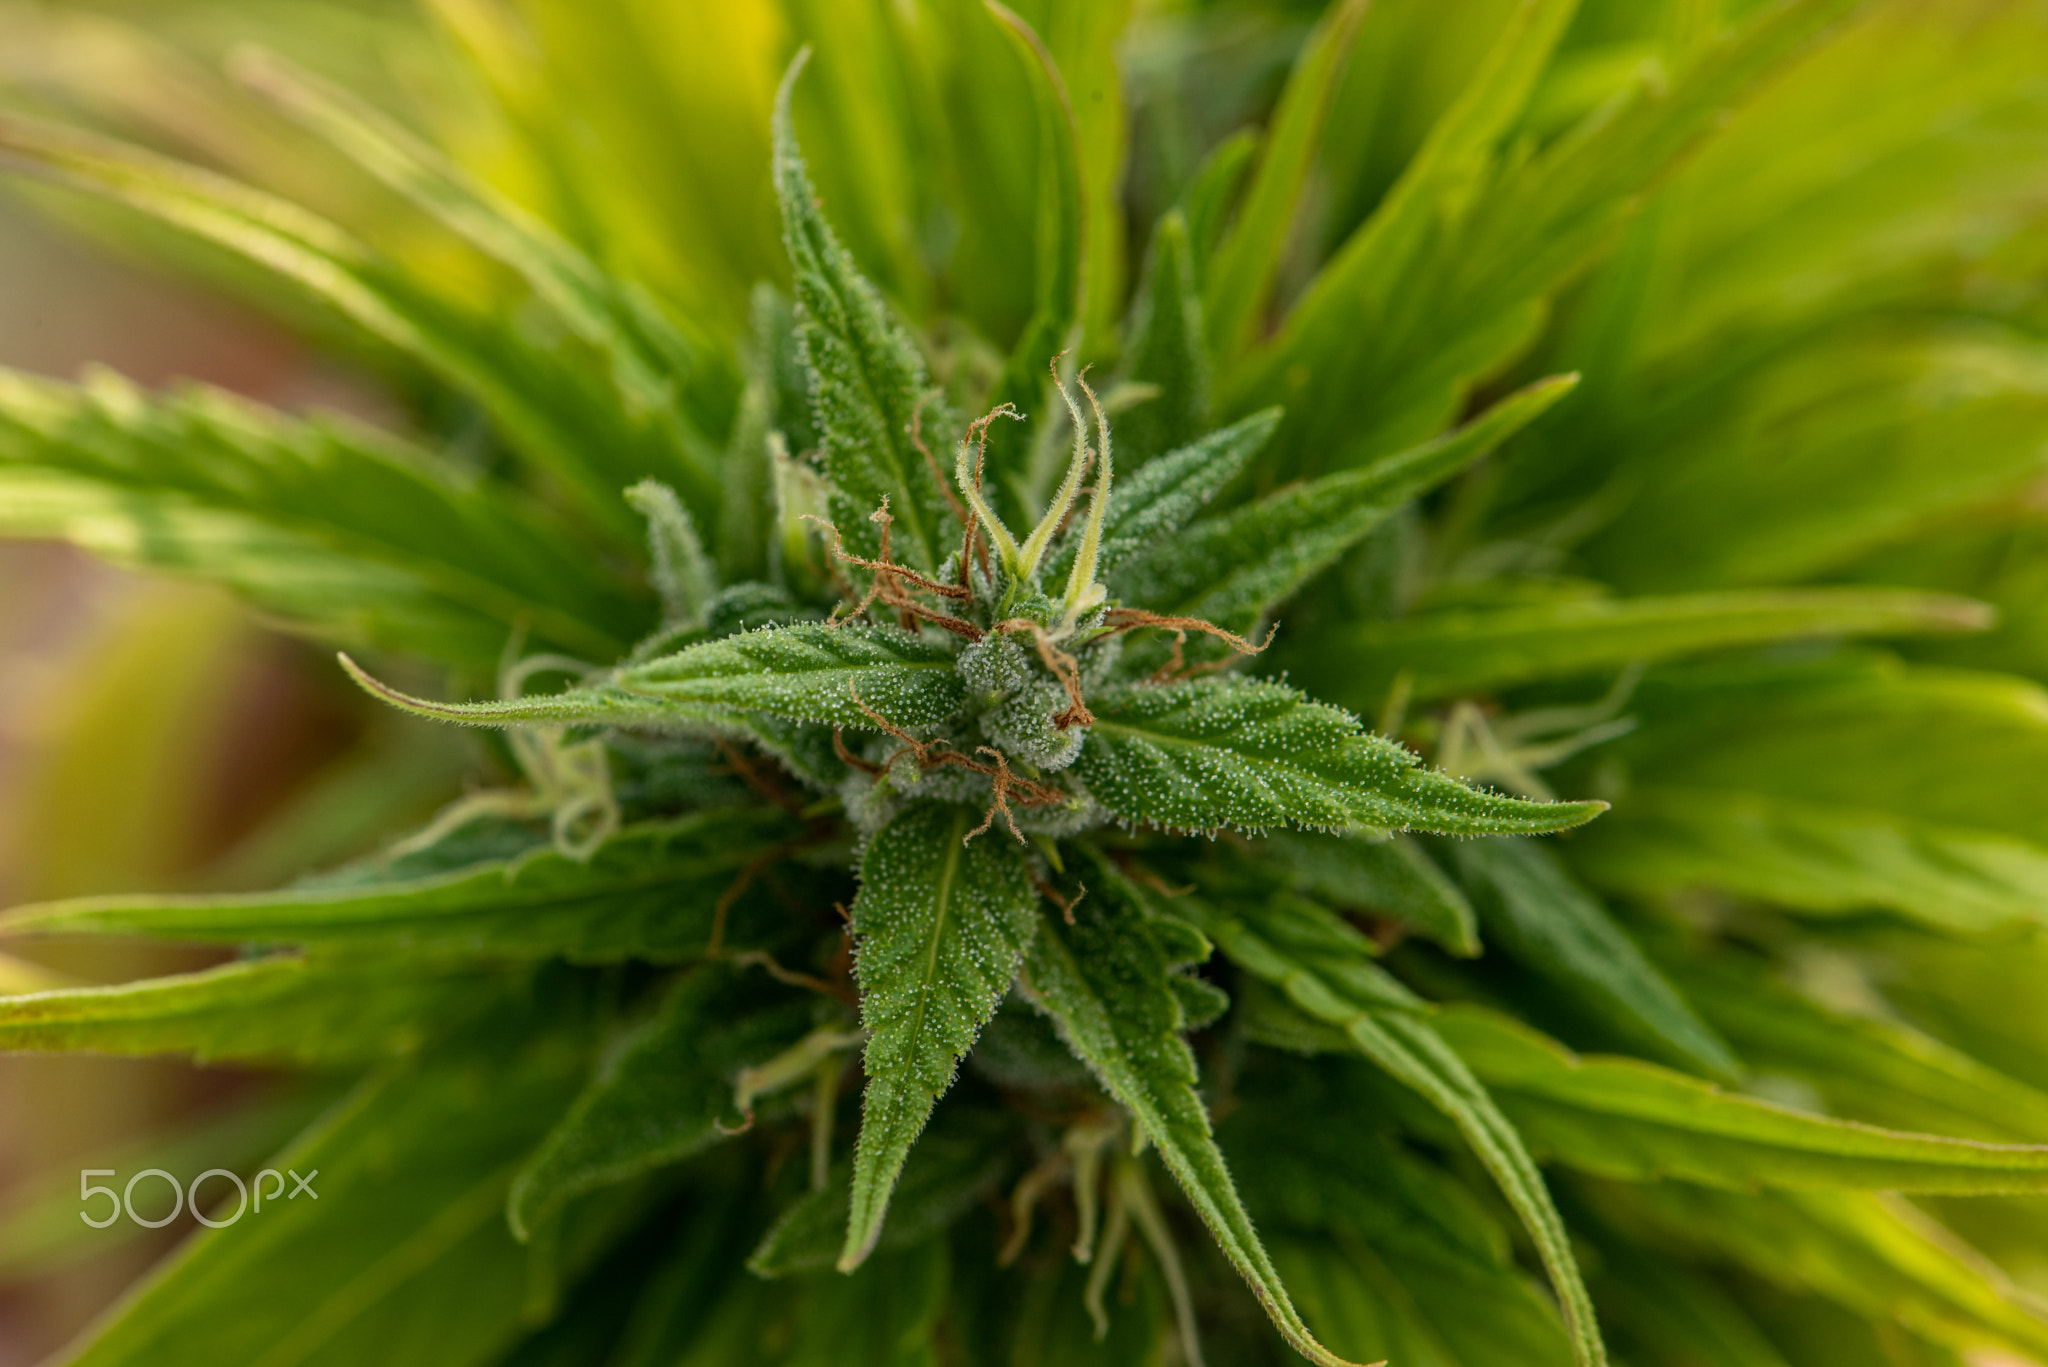 Medical Marijuana in Cannabis